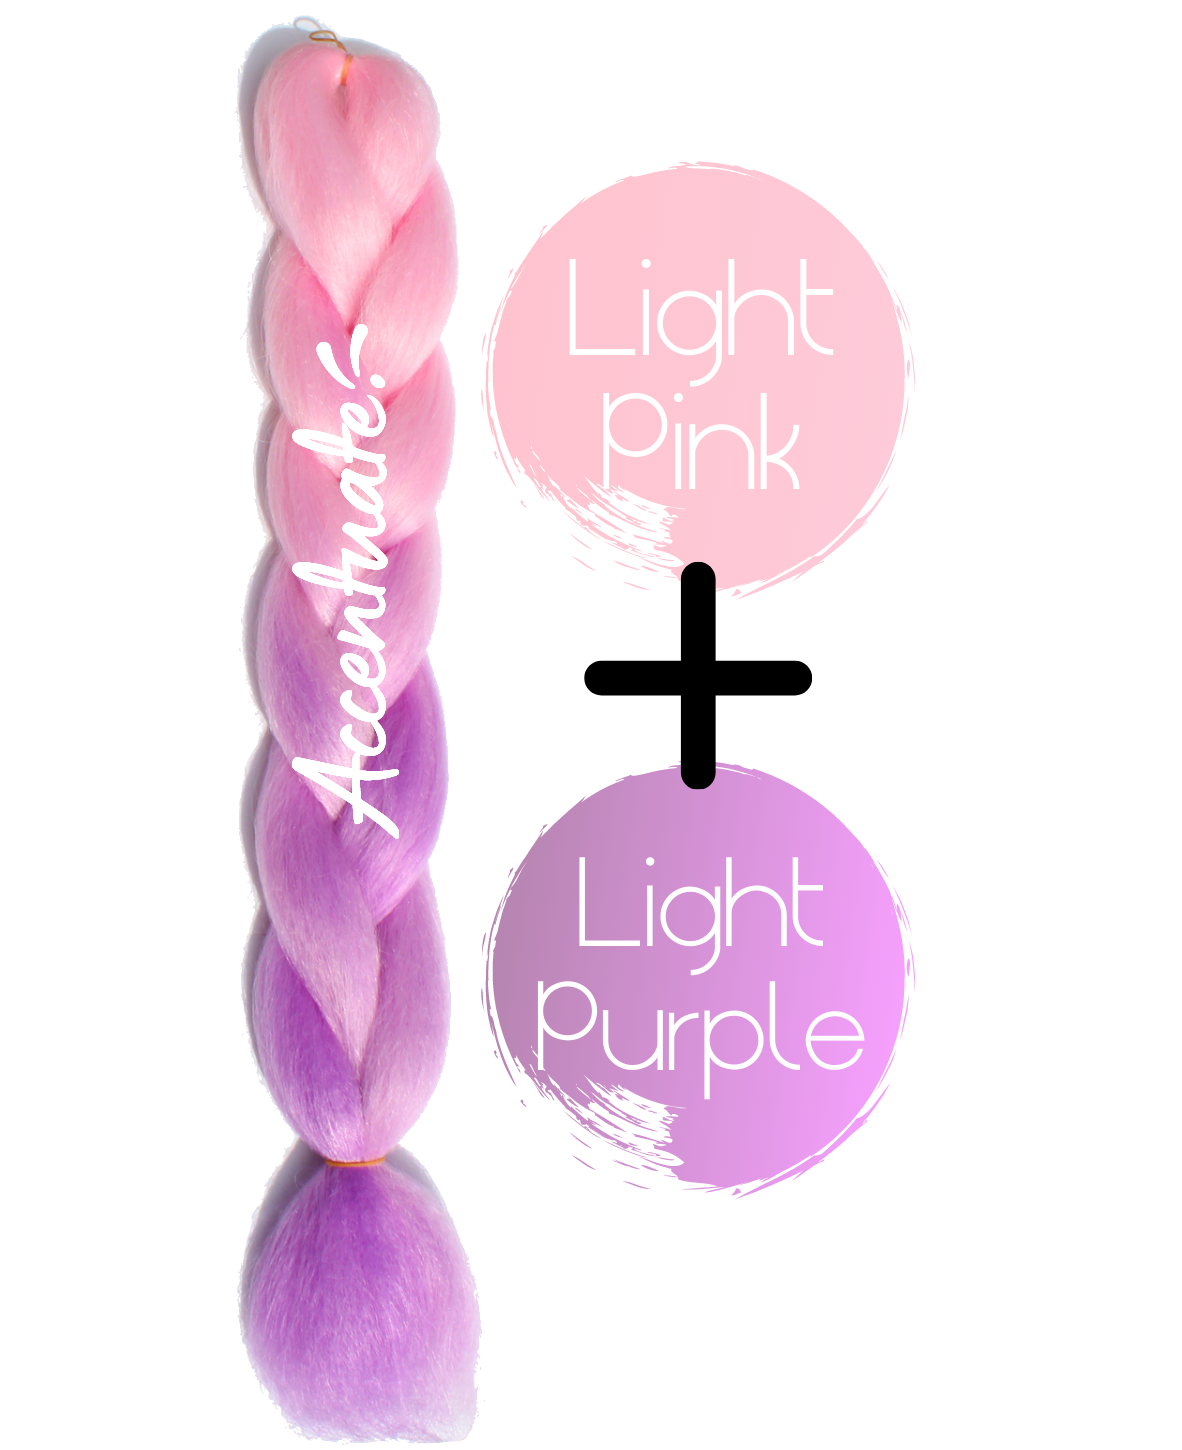 24" Light Pink + Light Purple Ombré Jumbo Braid Hair Extension